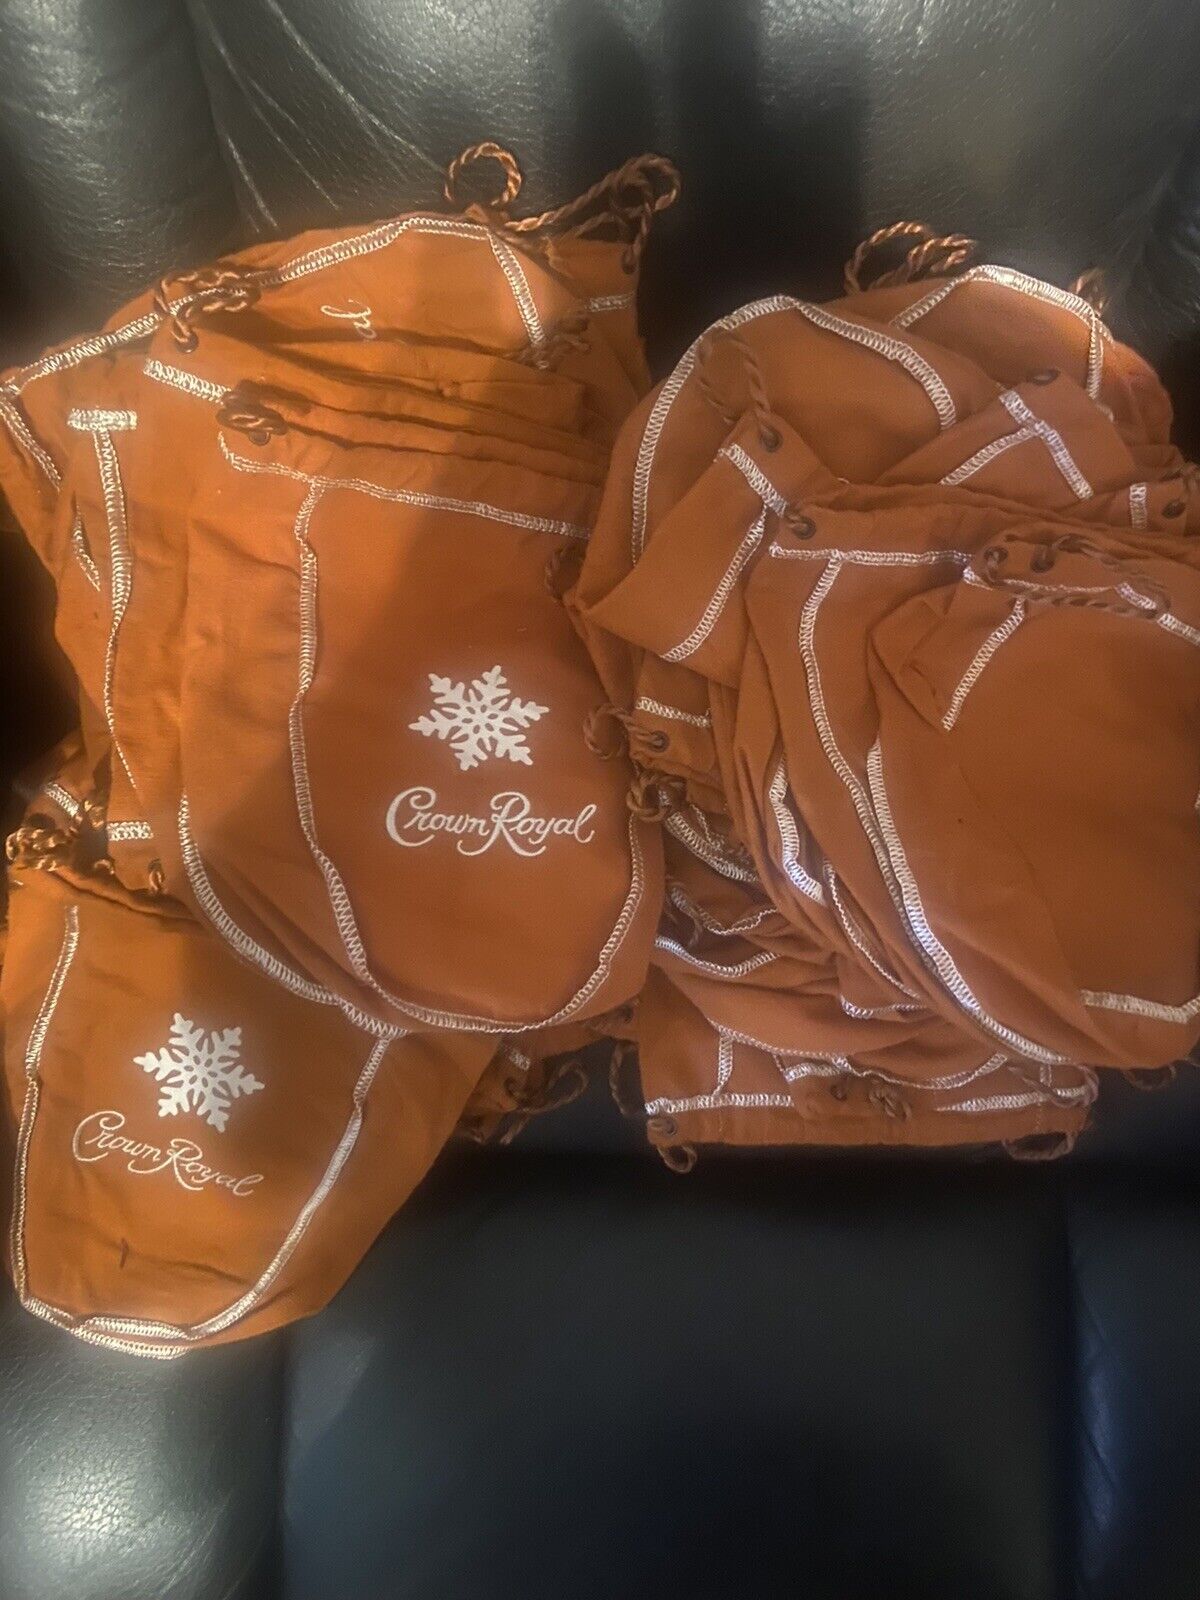 Lot Of 10 Crown Royal Snowflake 9” burnt orange, Salted Caramel Bags Excellent